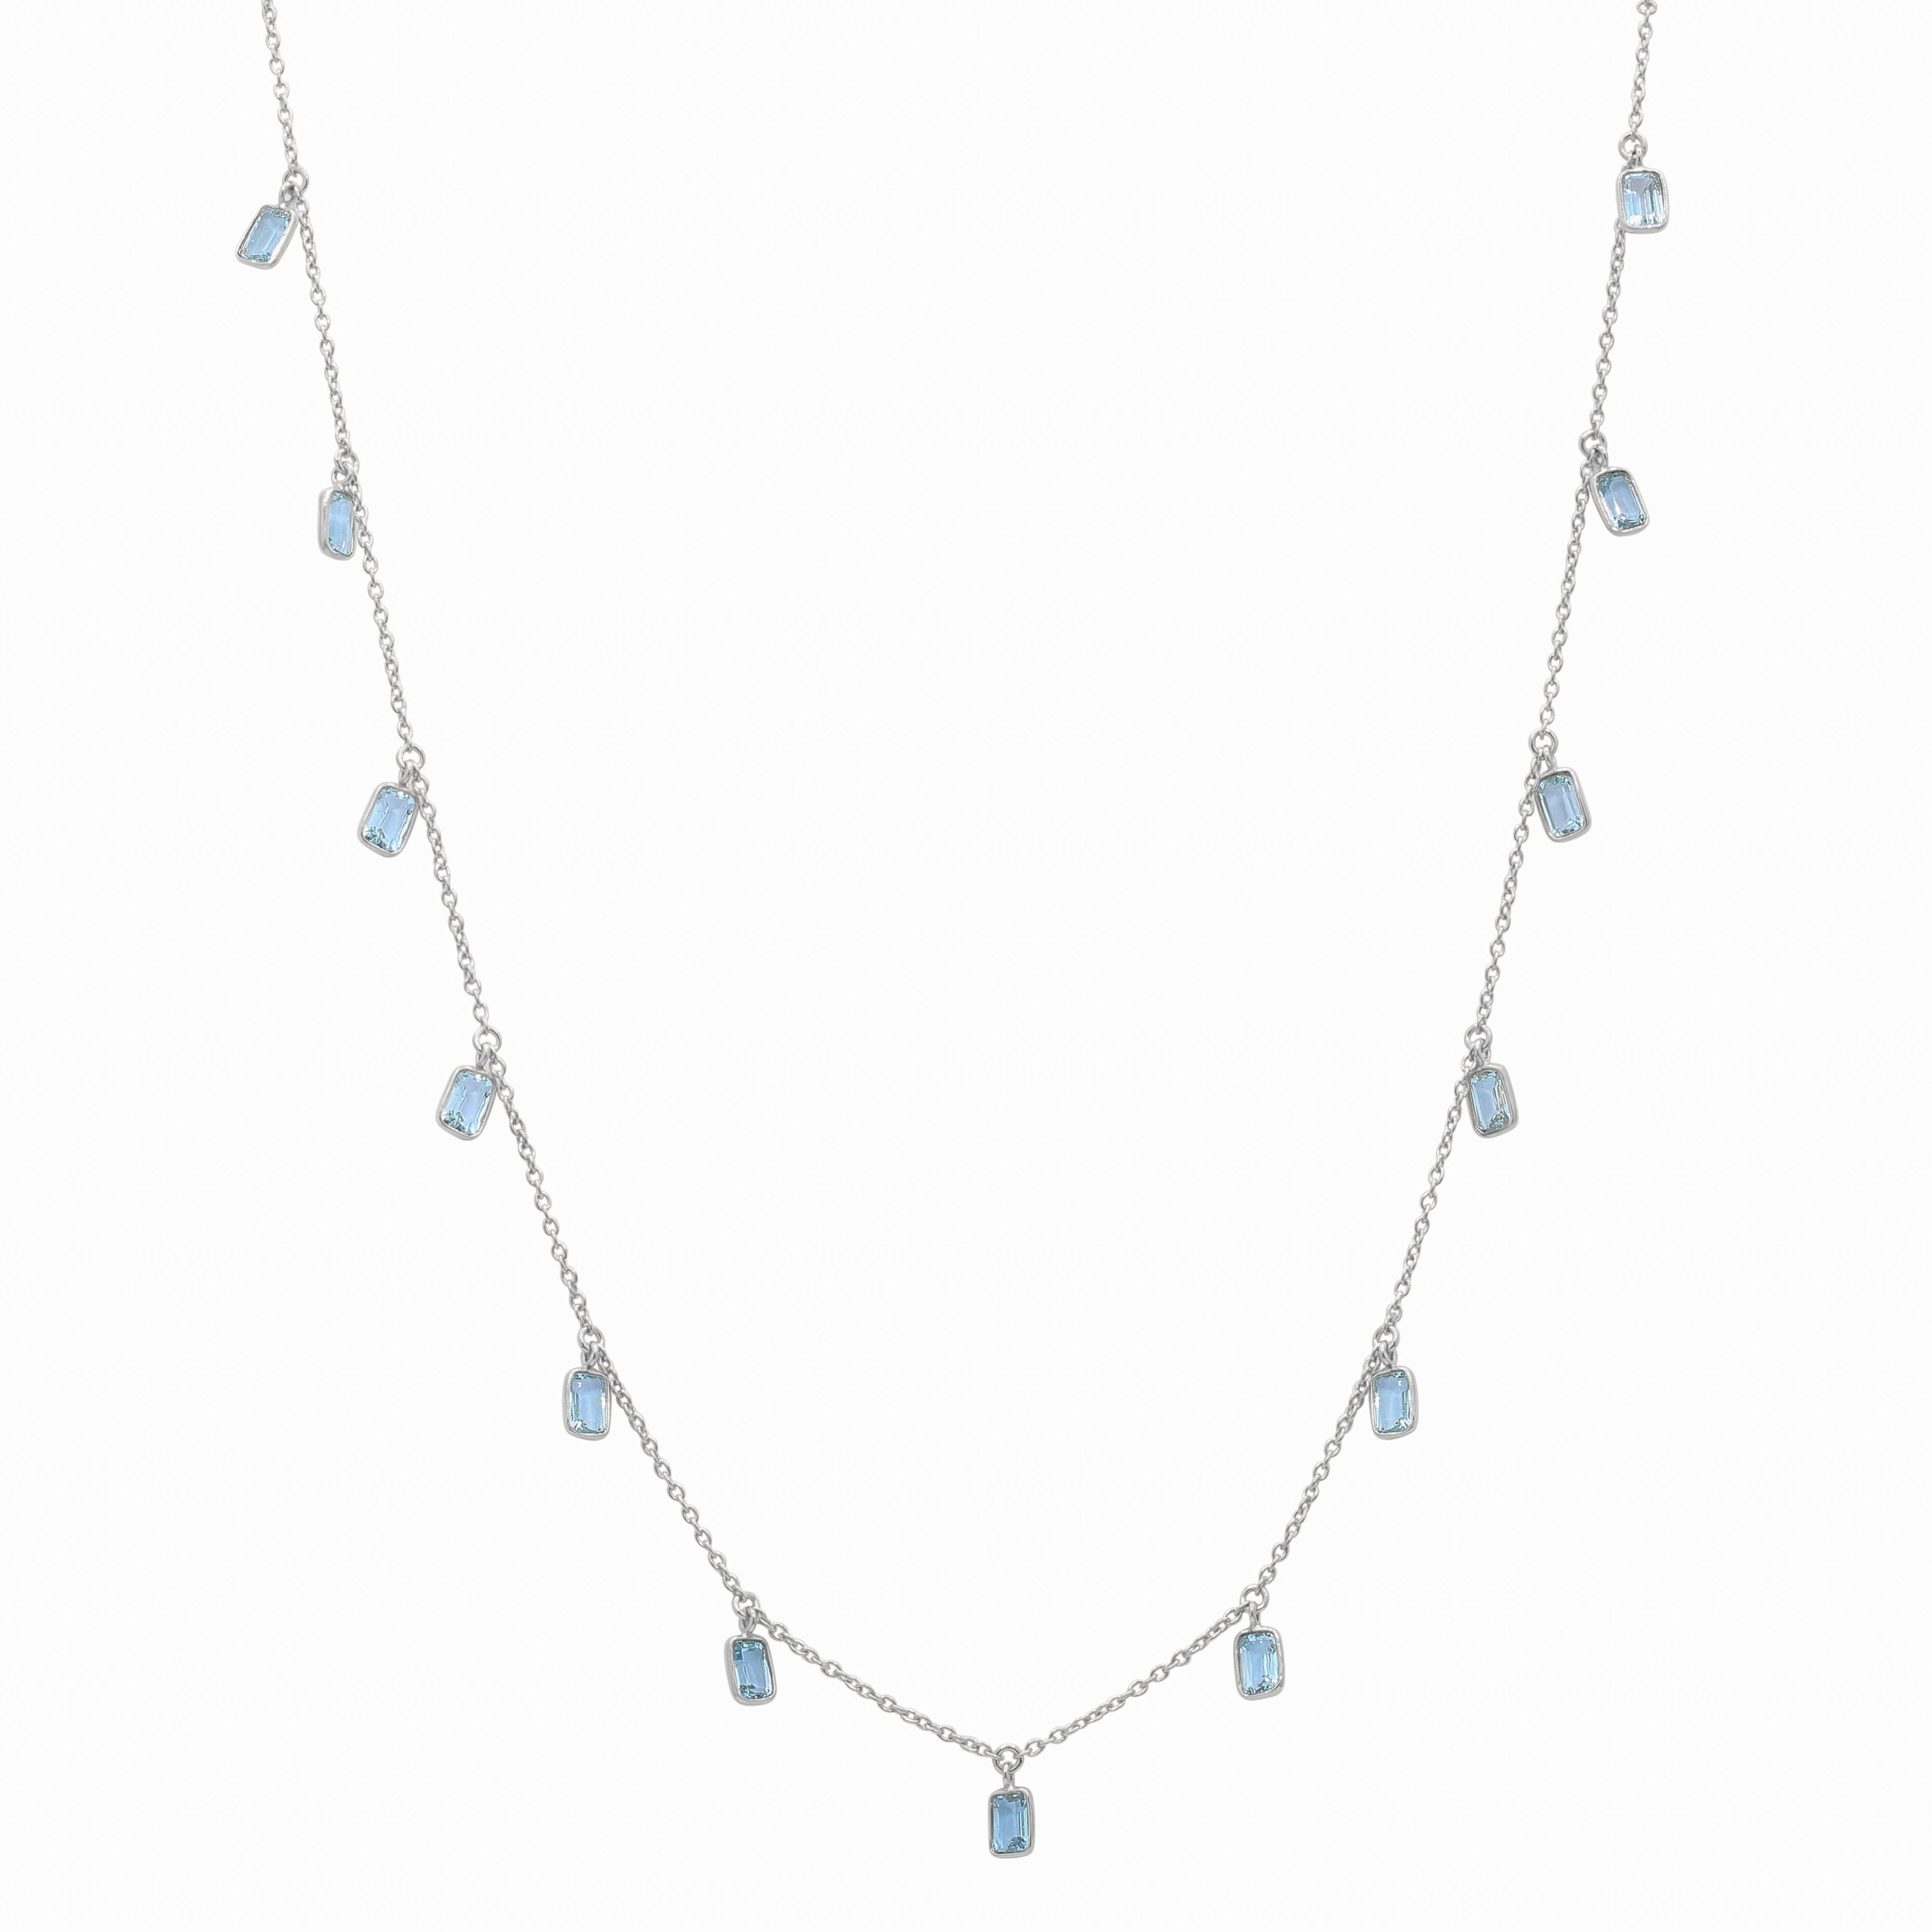 tiggy silver necklace with sky blue topaz from memara